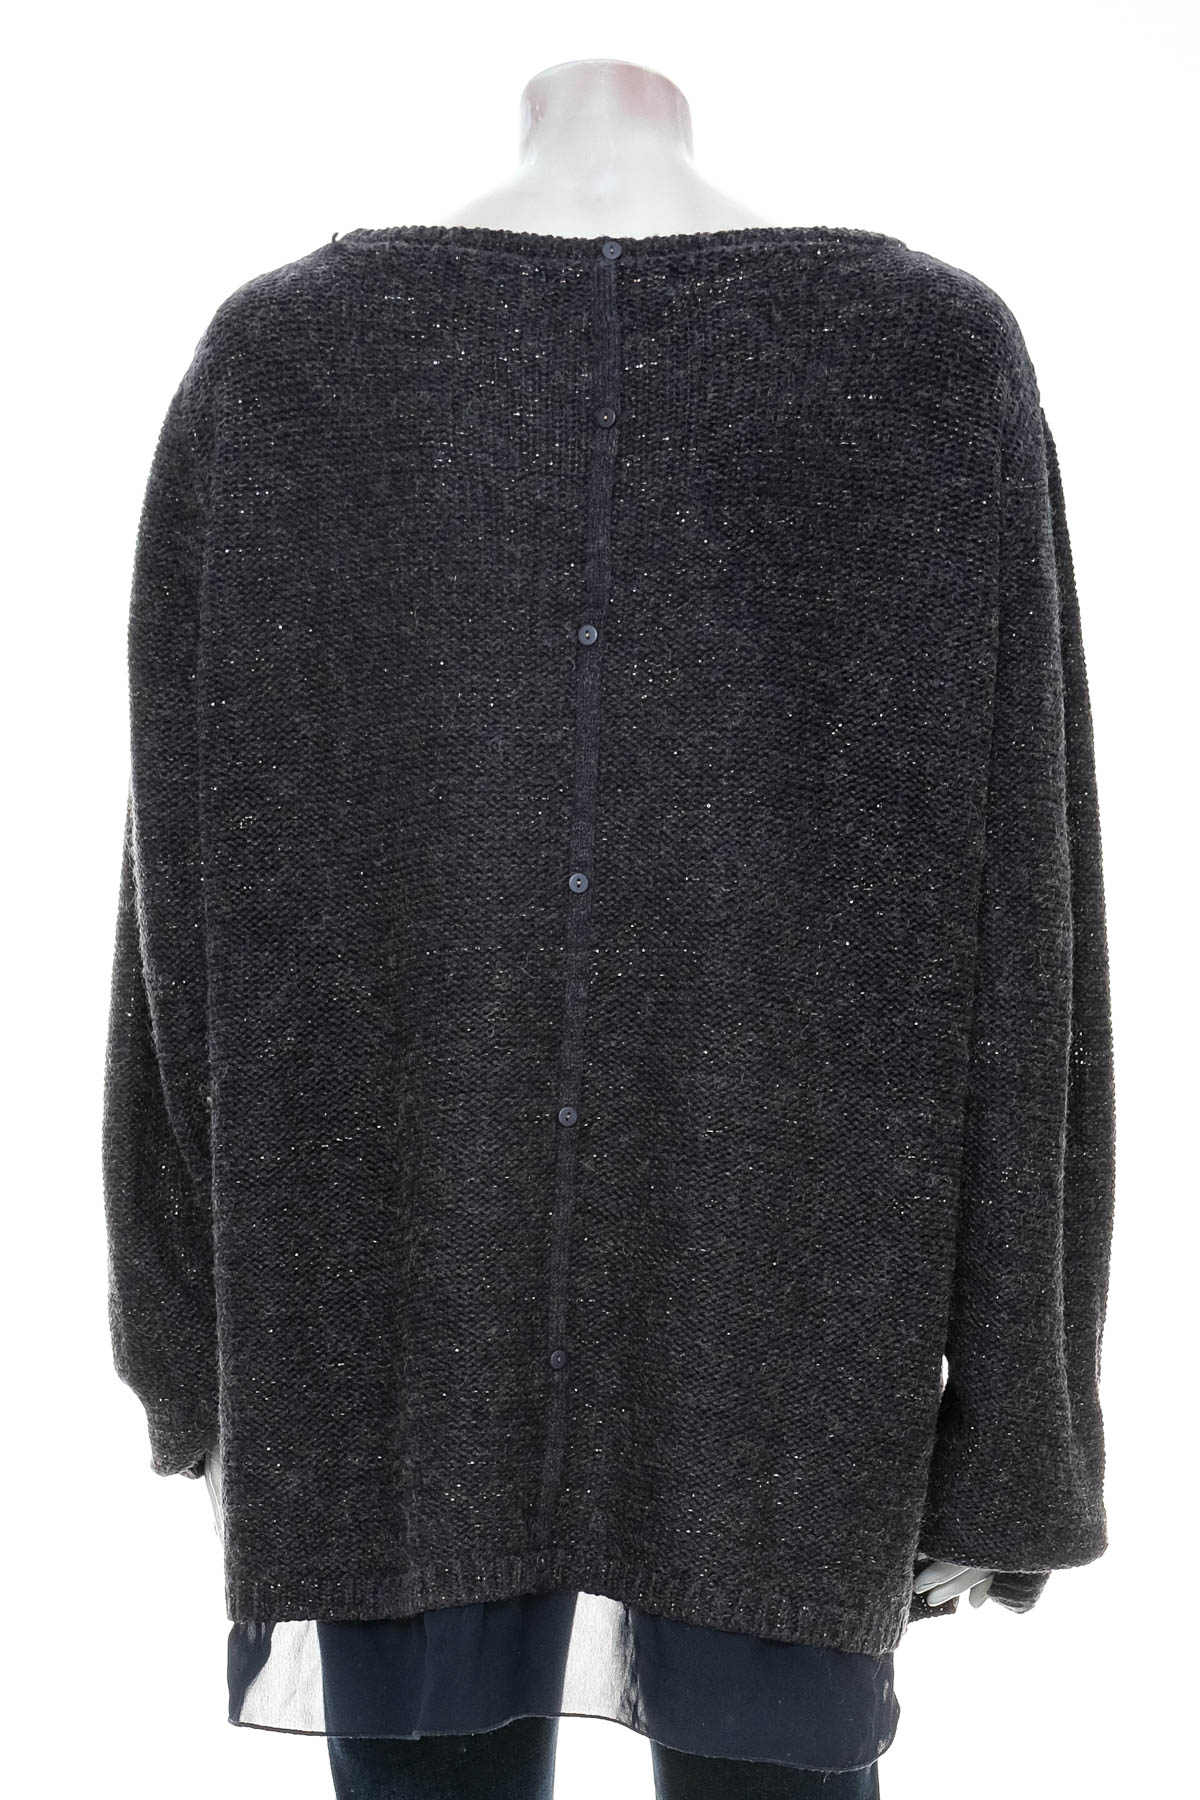 Women's sweater - EMOI BY EMONITE - 1